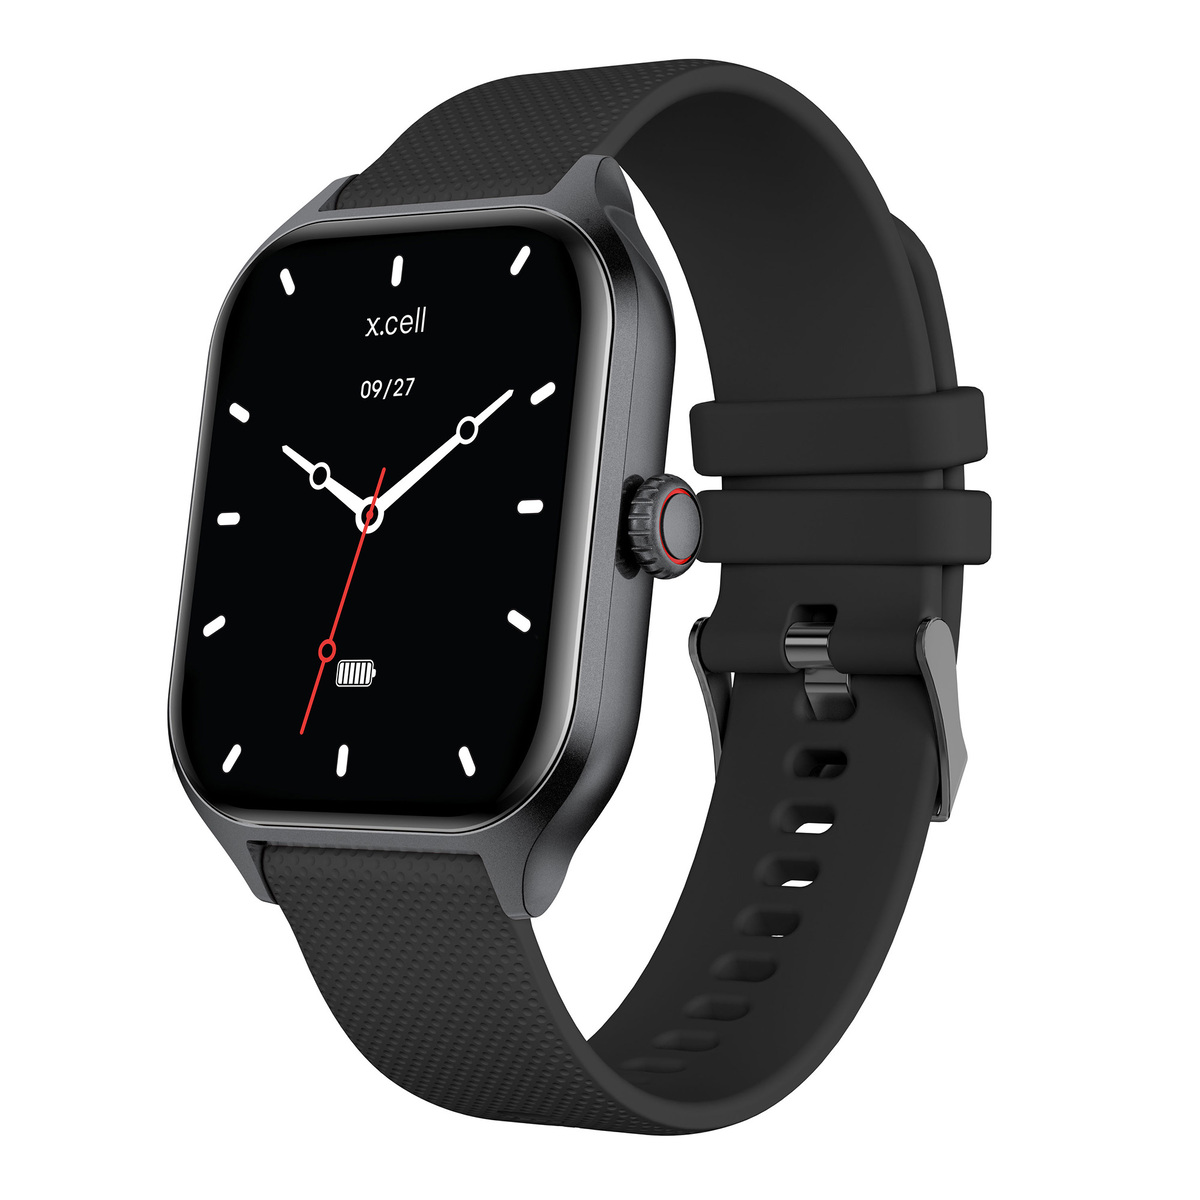 X.Cell Smart Watch G7T Pro Black